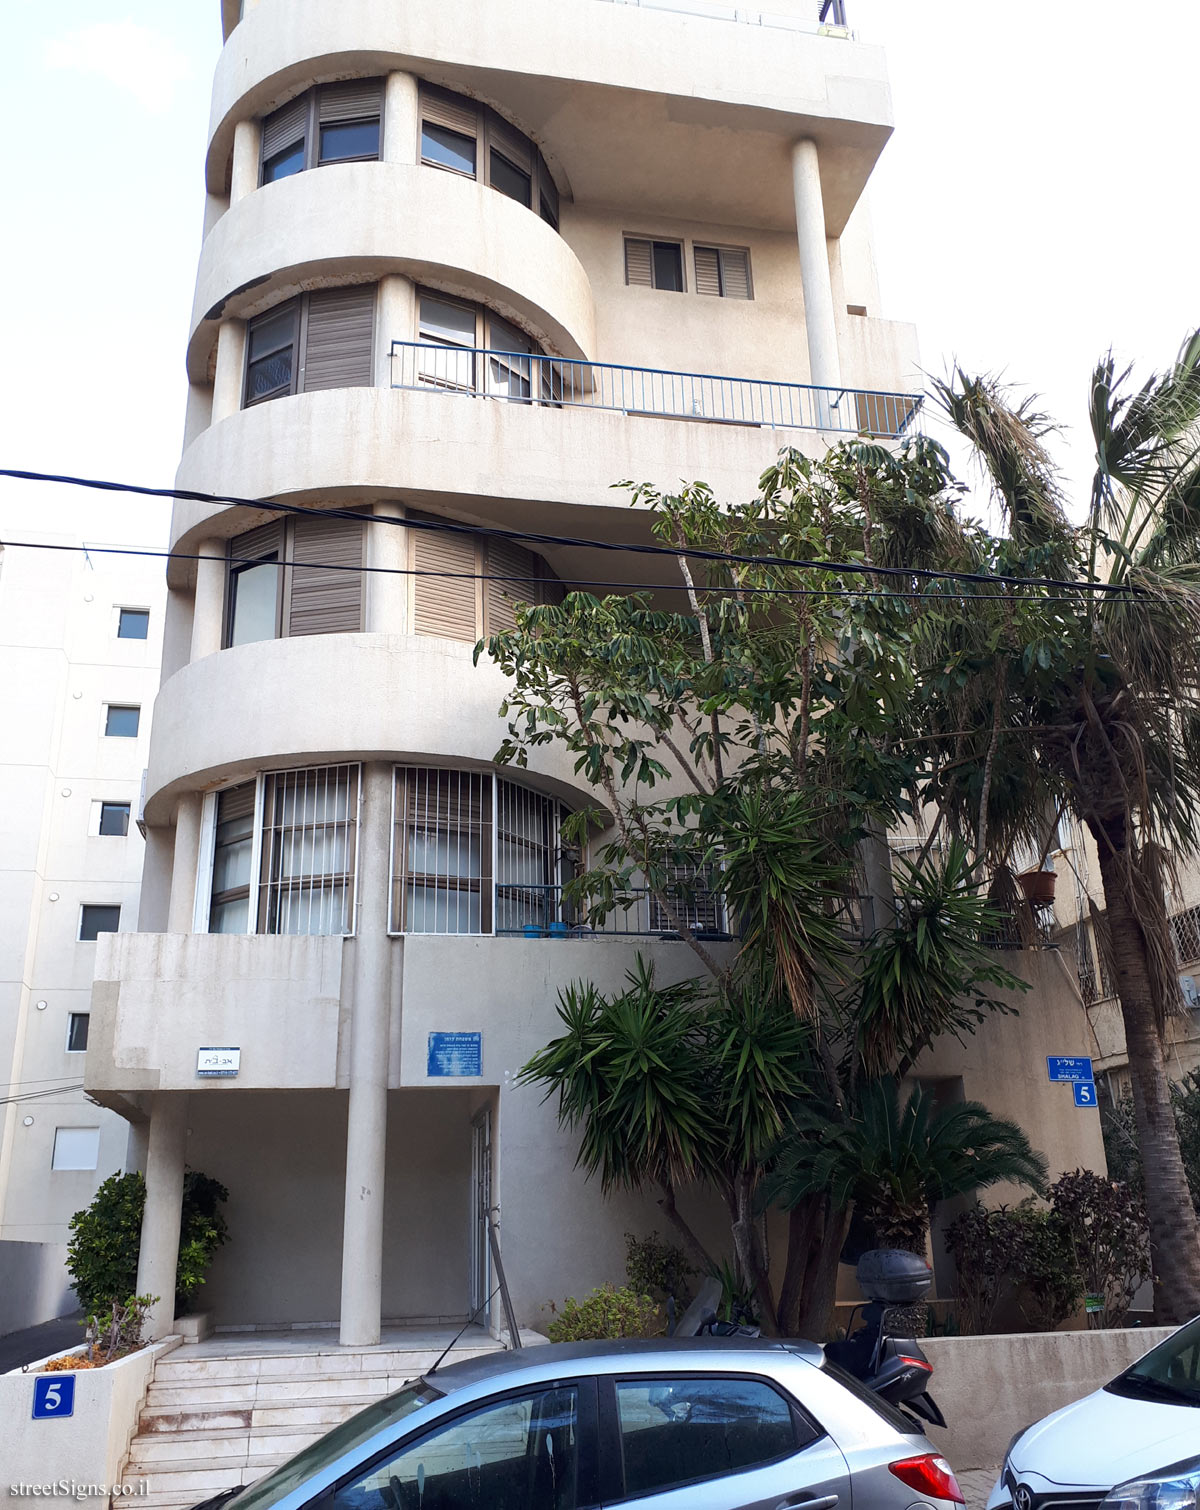 Tel Aviv - Heritage Sites in Israel - Kadman Family House - Shalag St 5, Tel Aviv-Yafo, Israel